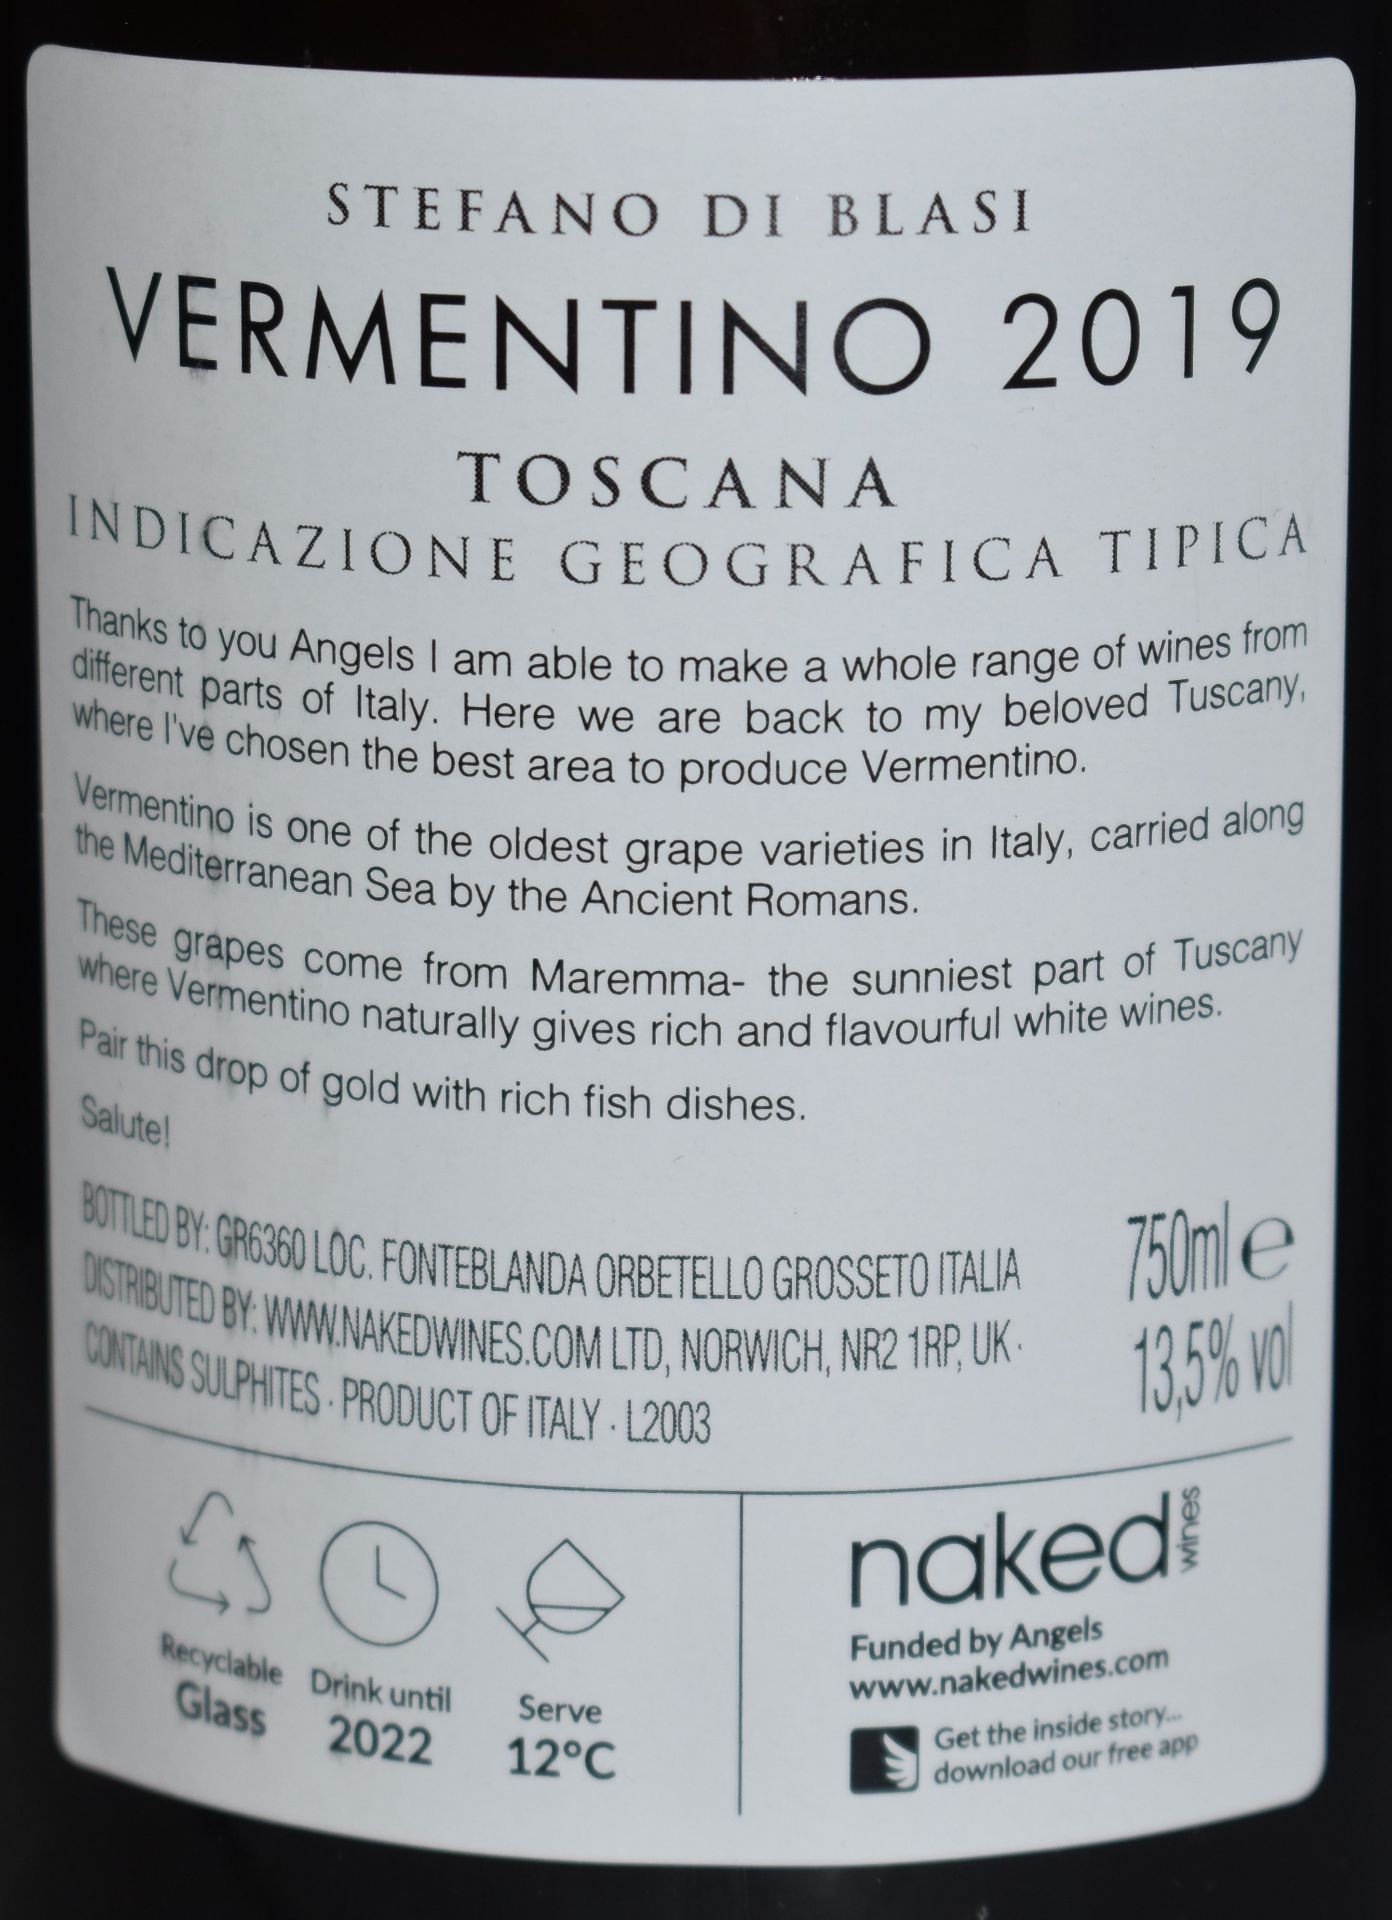 12 x Bottles of Stefano Di Blasi 2019 Vermentino Toscana 13.5% Wine - 750ml Bottles - Drink Until - Image 6 of 8